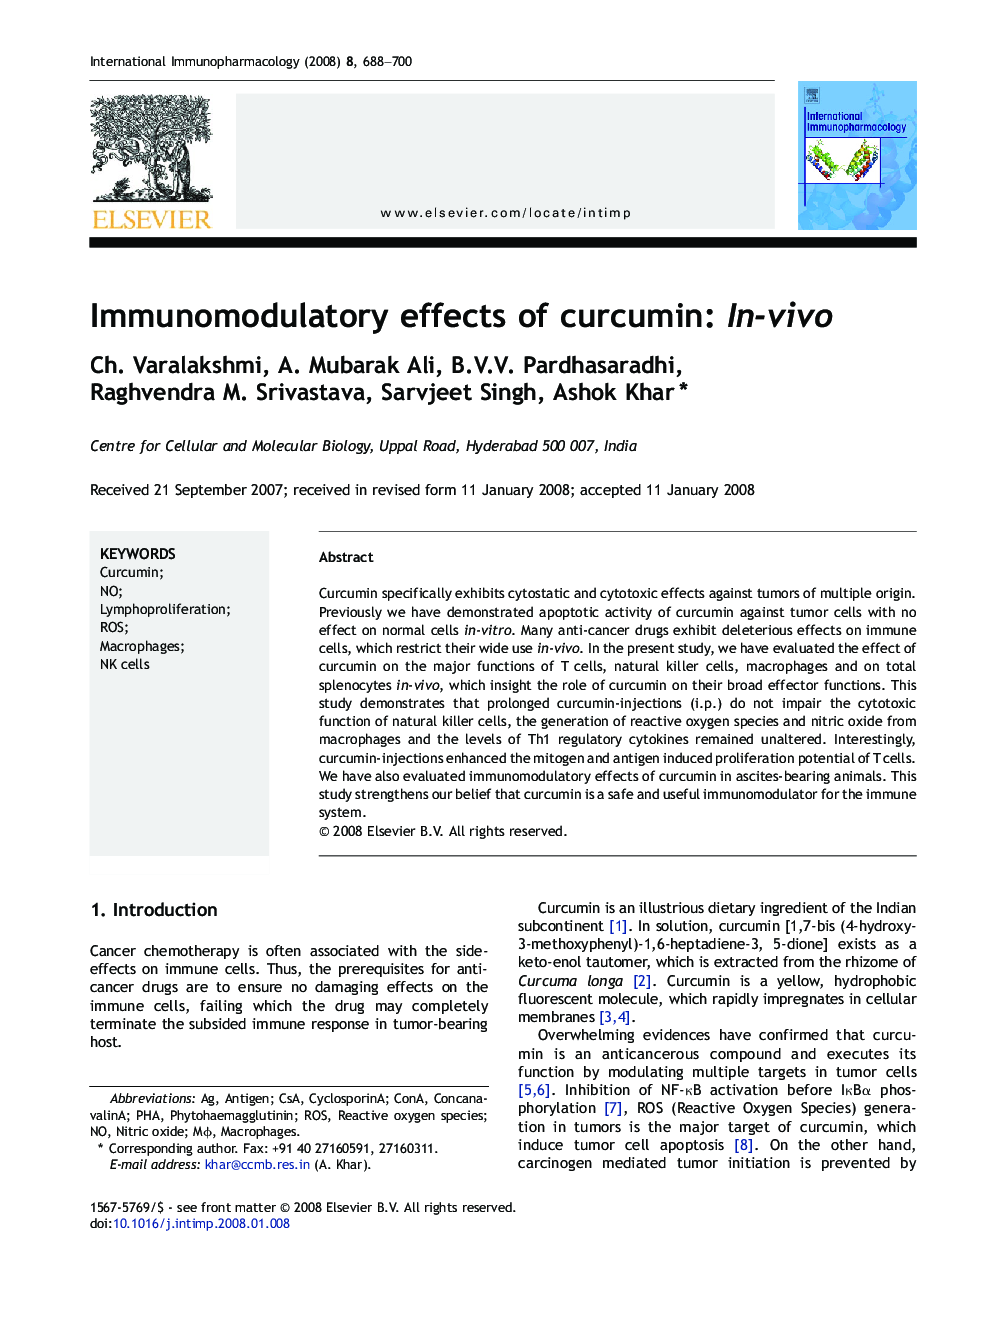 Immunomodulatory effects of curcumin: In-vivo